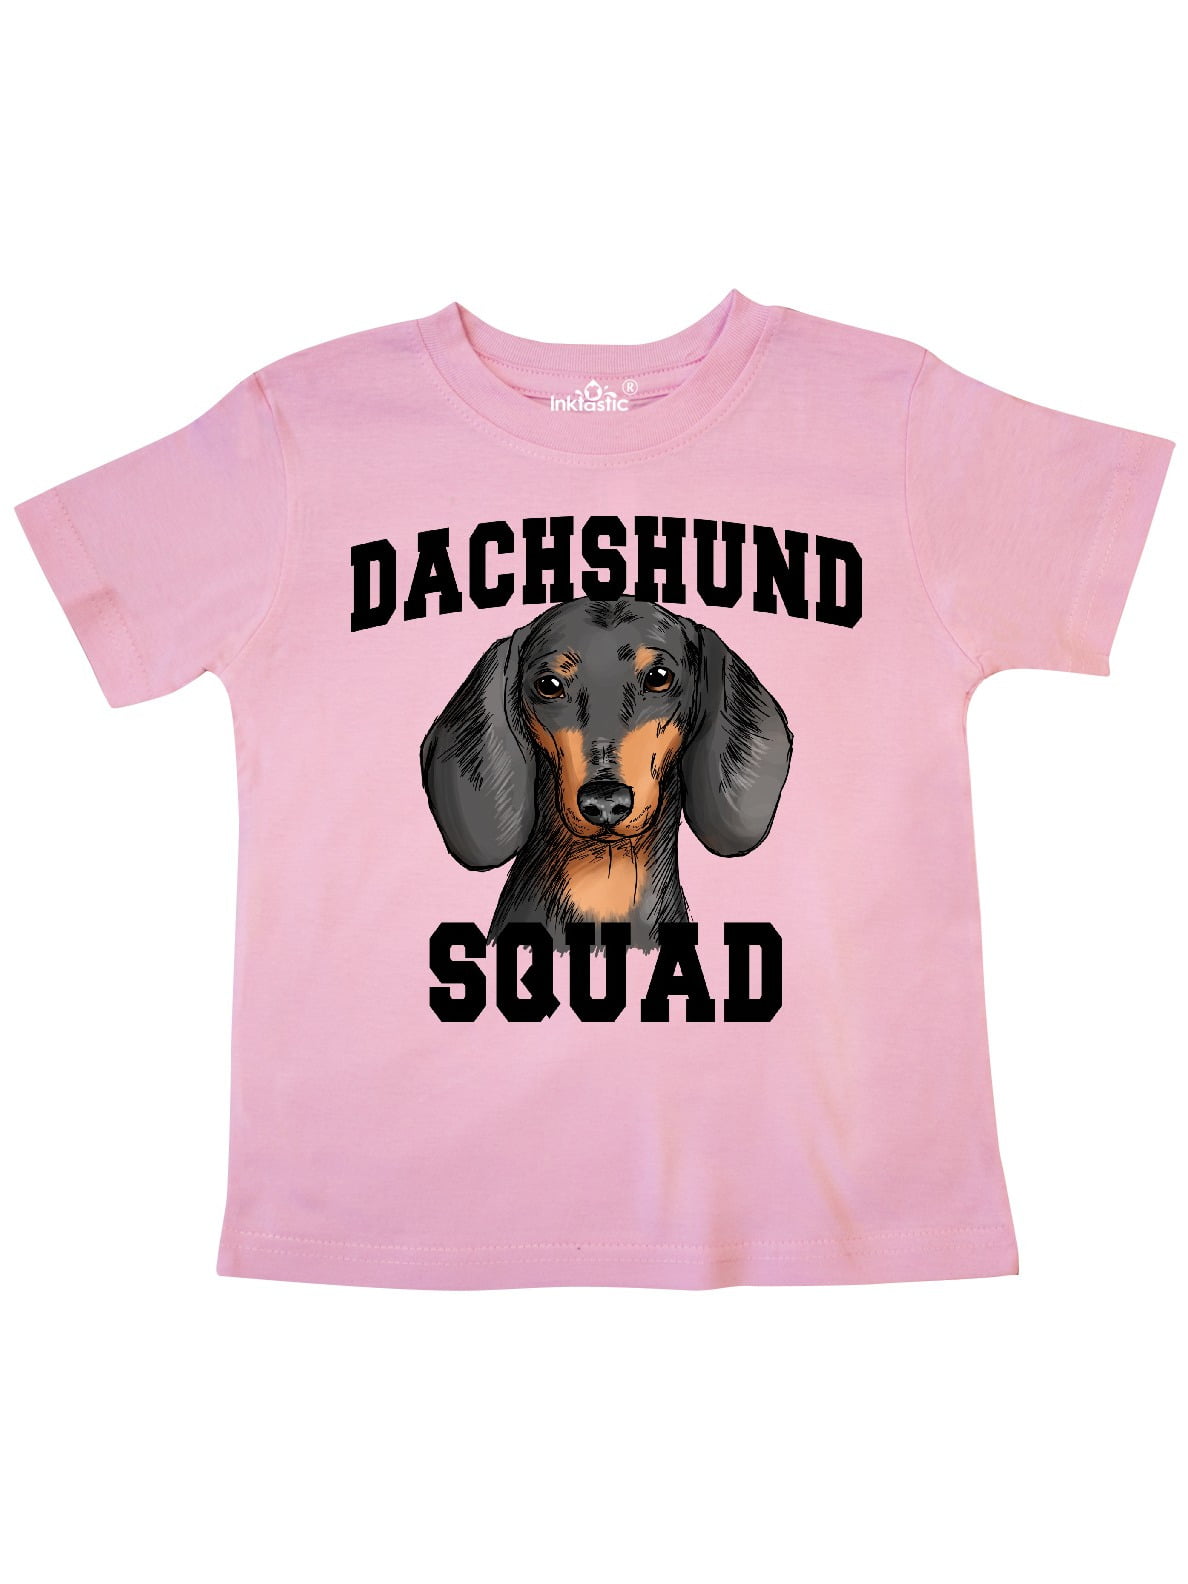 I Love Dachshund Toddler/Infant Girls Short Sleeve T-Shirts Ruffles Shirt T-Shirt for 2-6T 